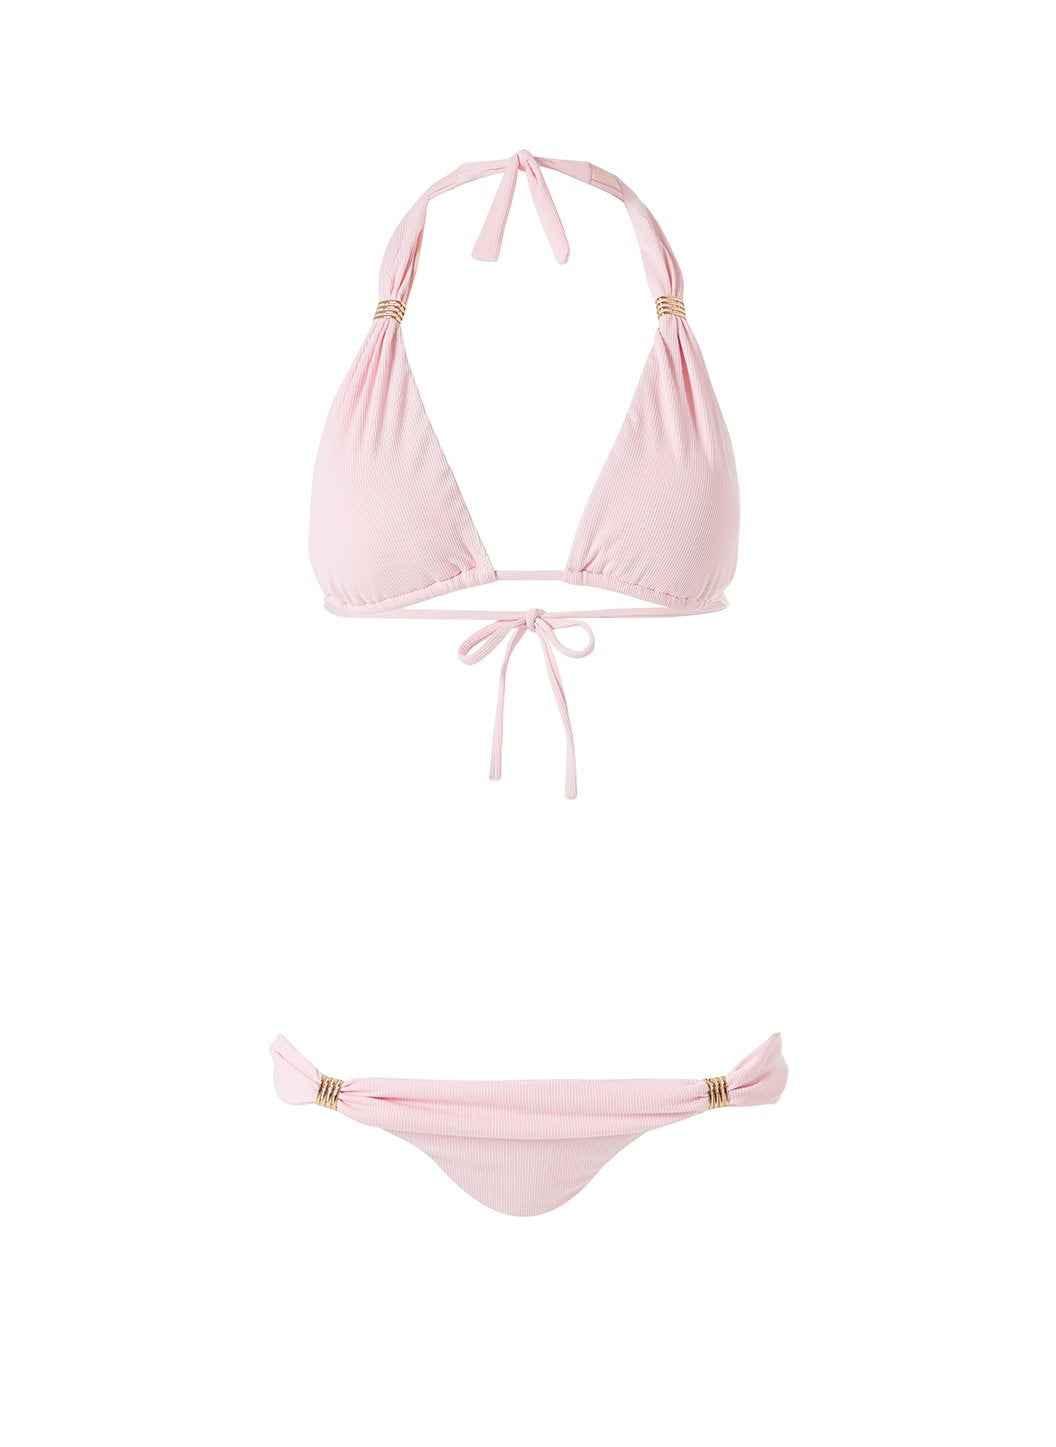 Melissa Odabash Cancun Rose Bikini | Official Website